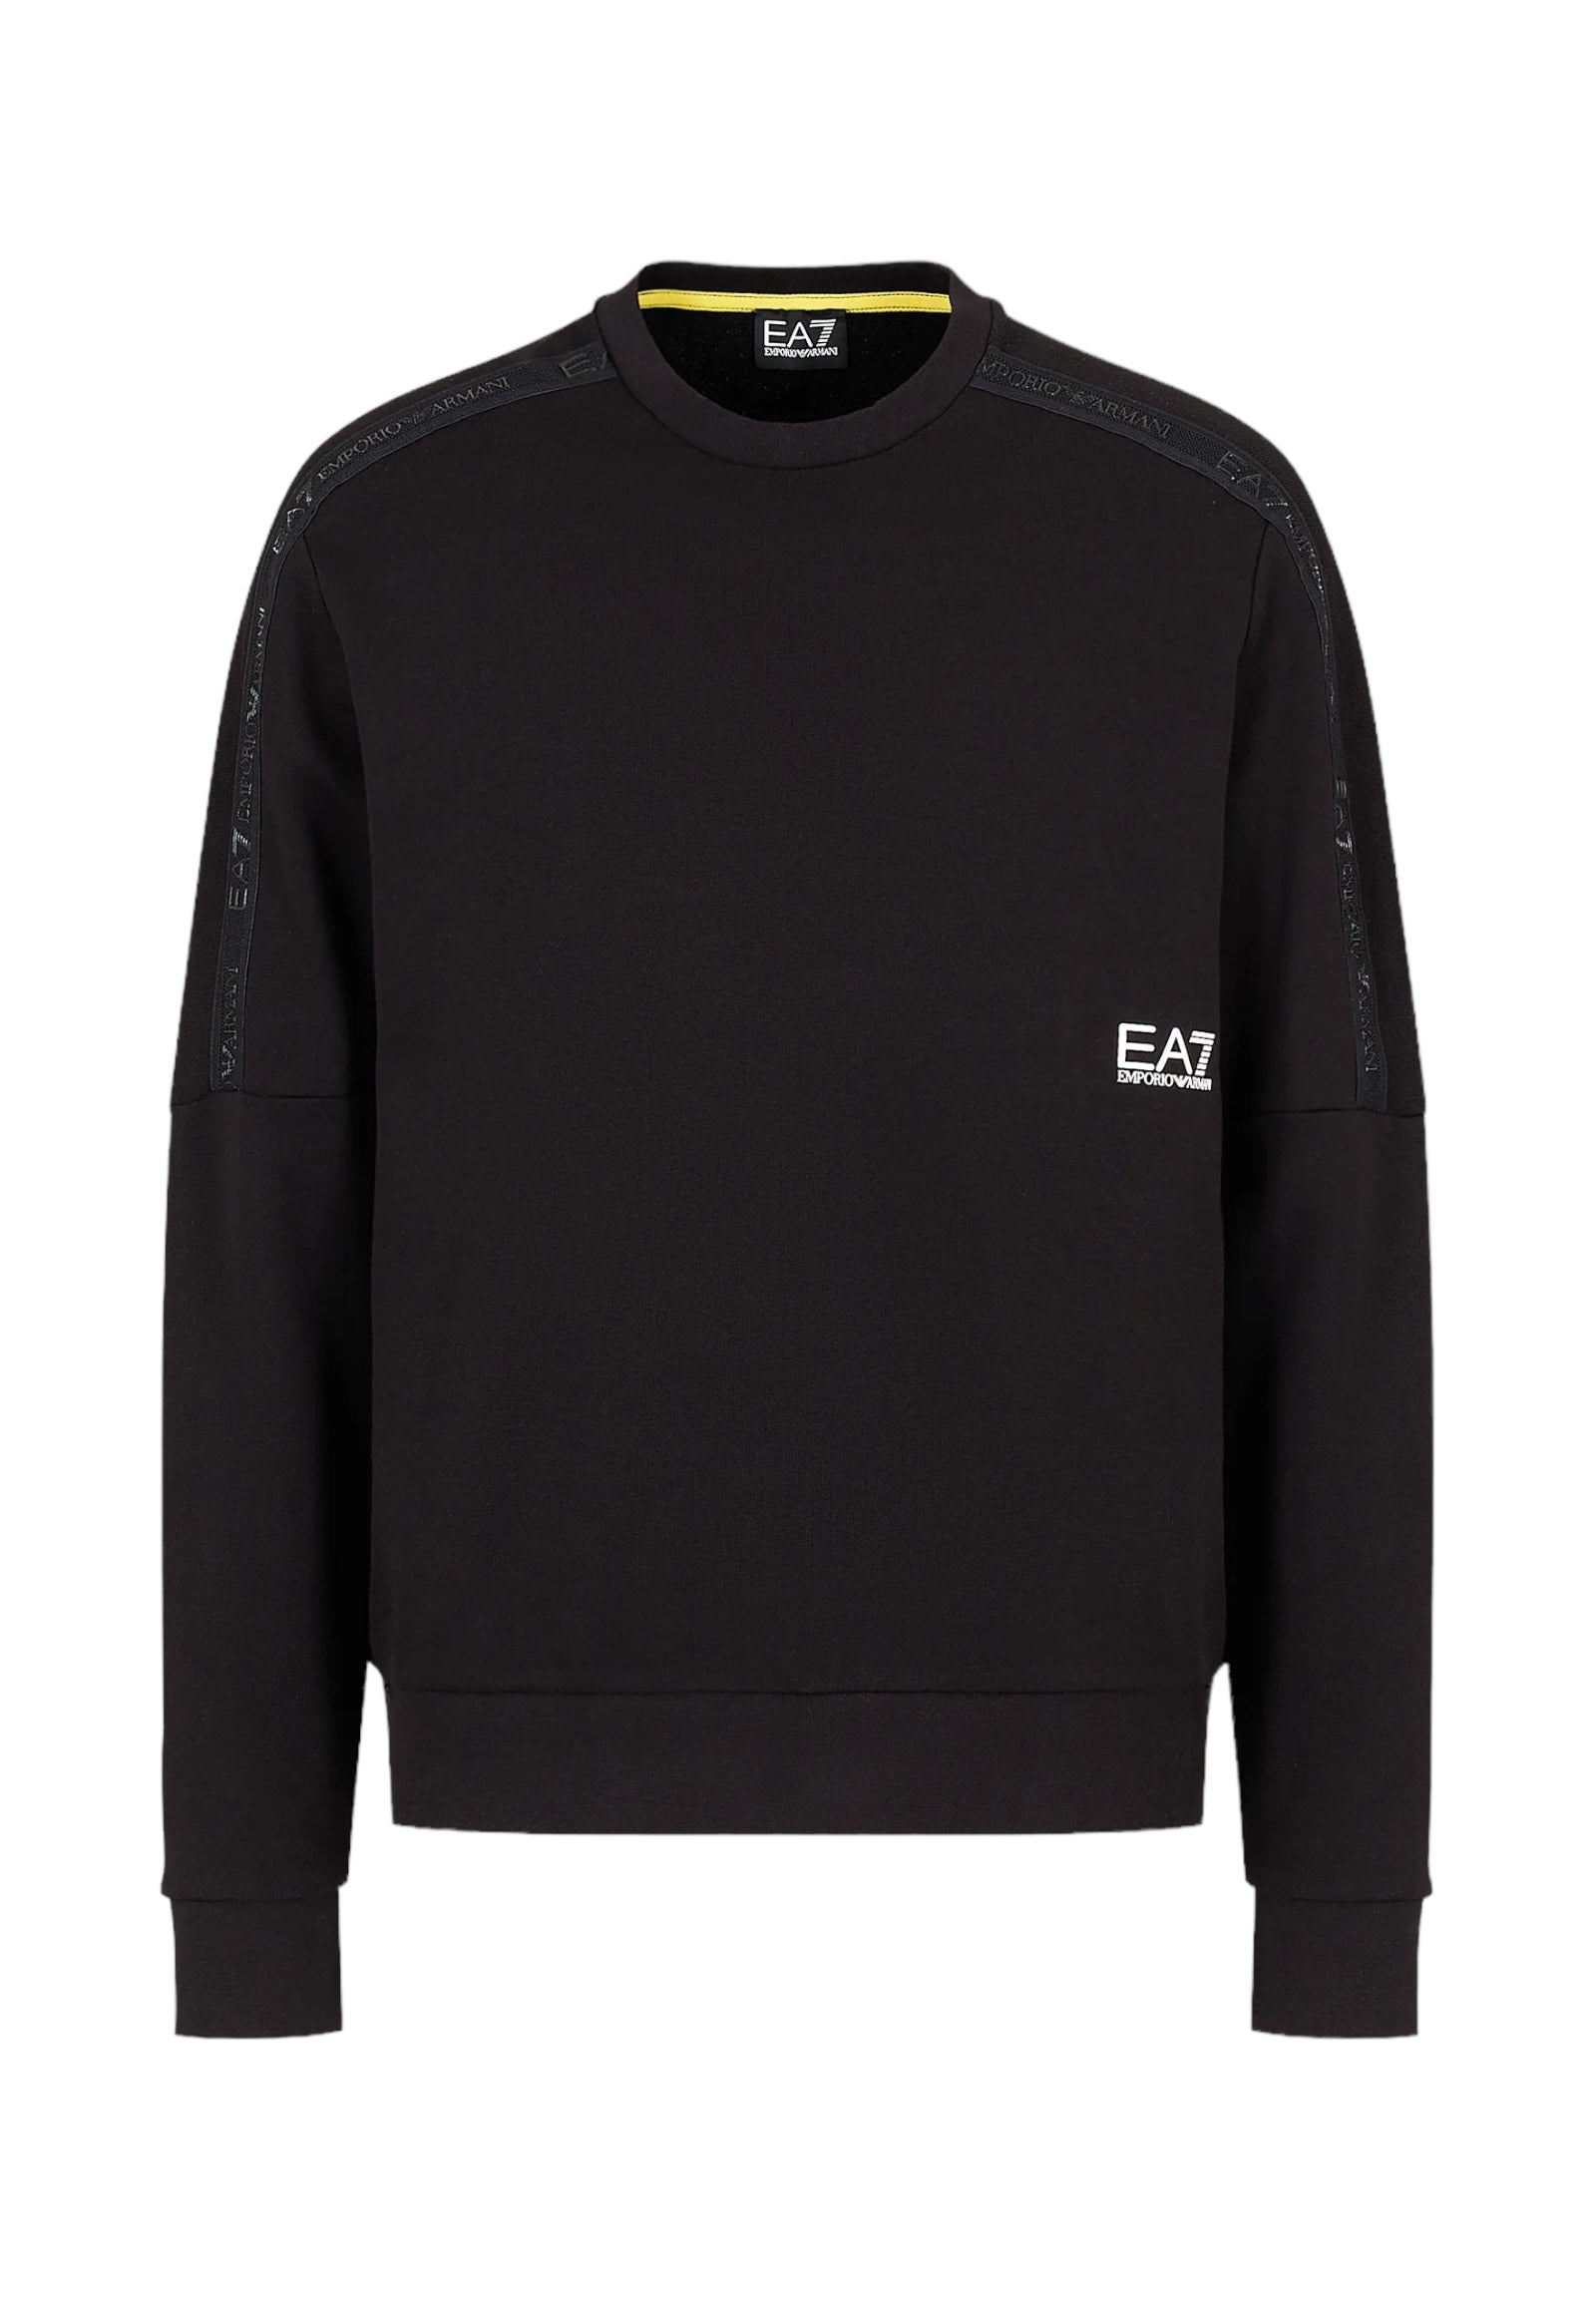 3dpm56 Black sweatshirt